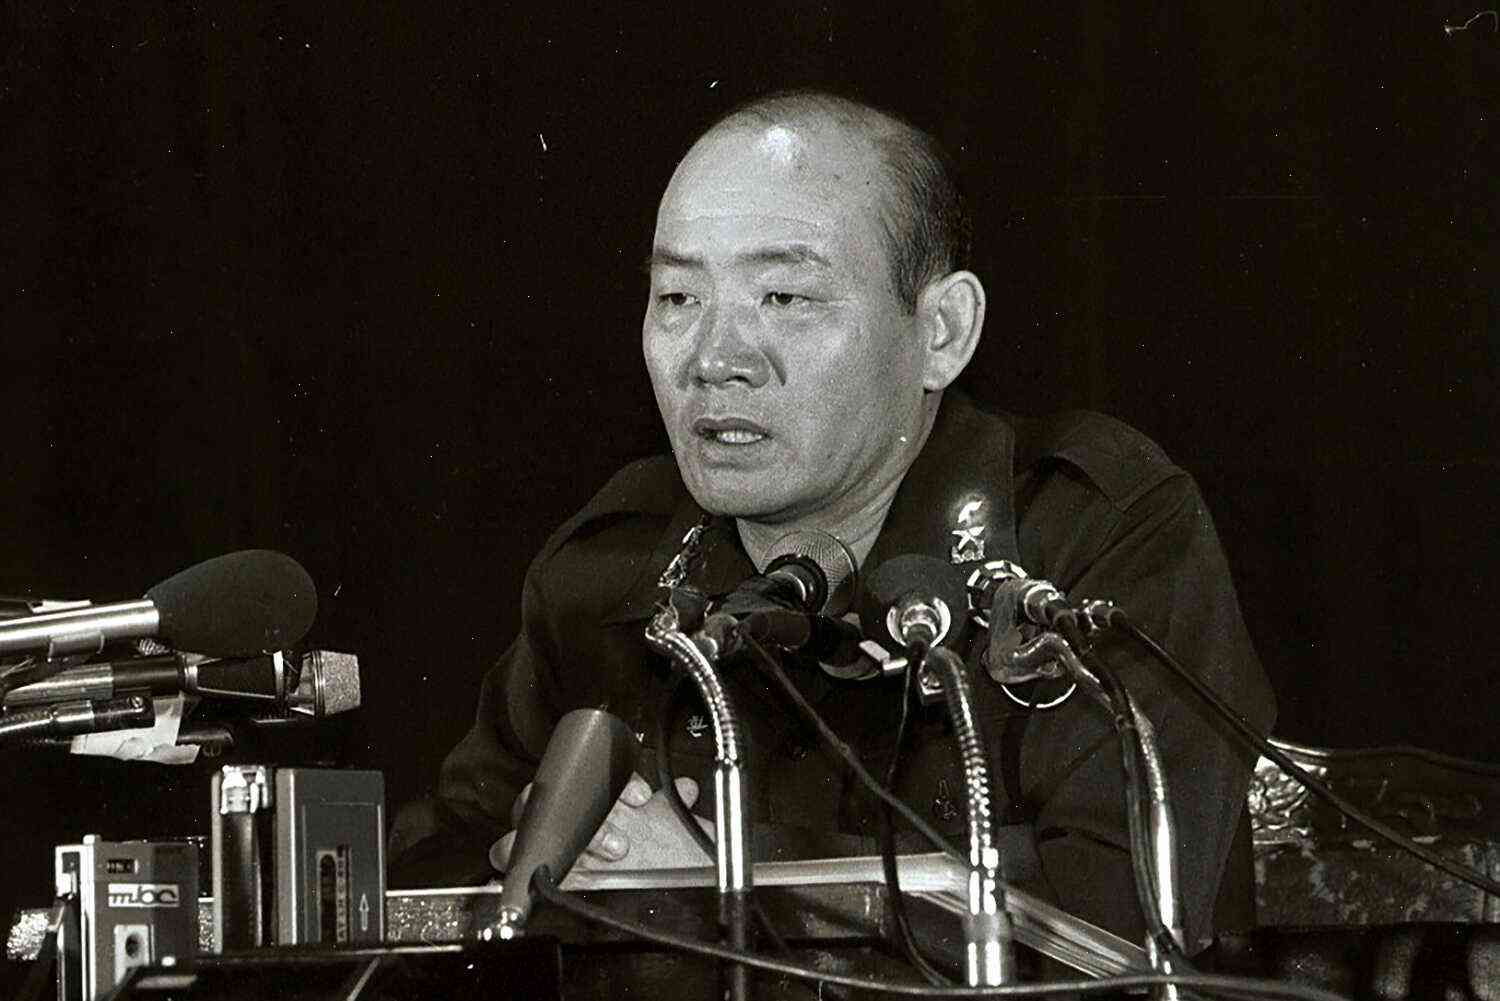 No one ever rose as high as Chun Doo-hwan, South Korea’s infamous military dictator